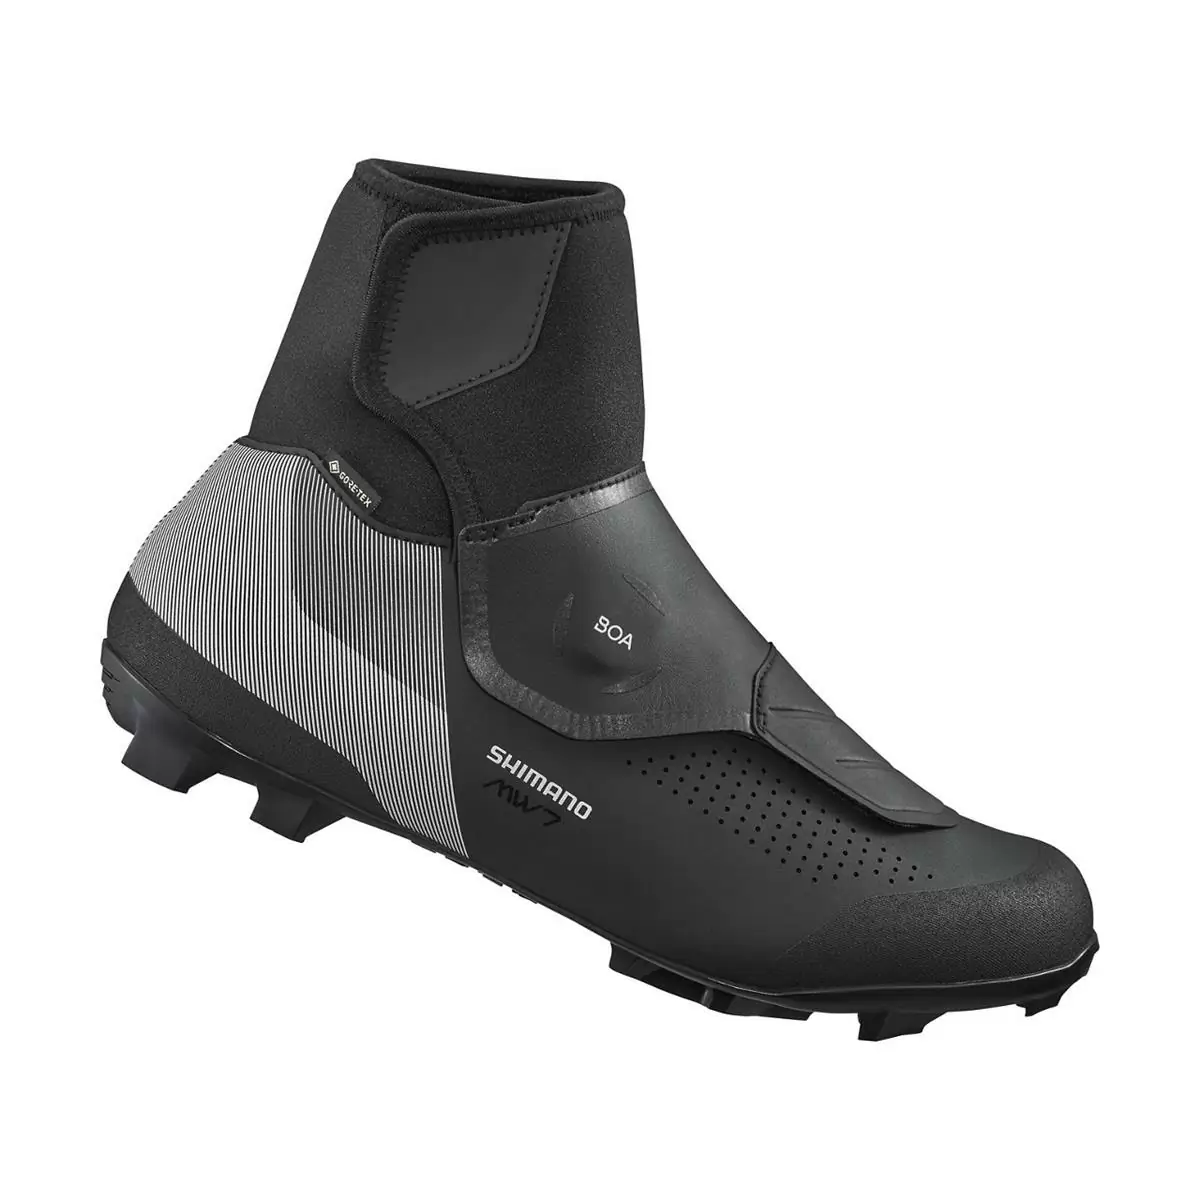 Winter MTB SH-MW702 Shoes Black Size 38 - image